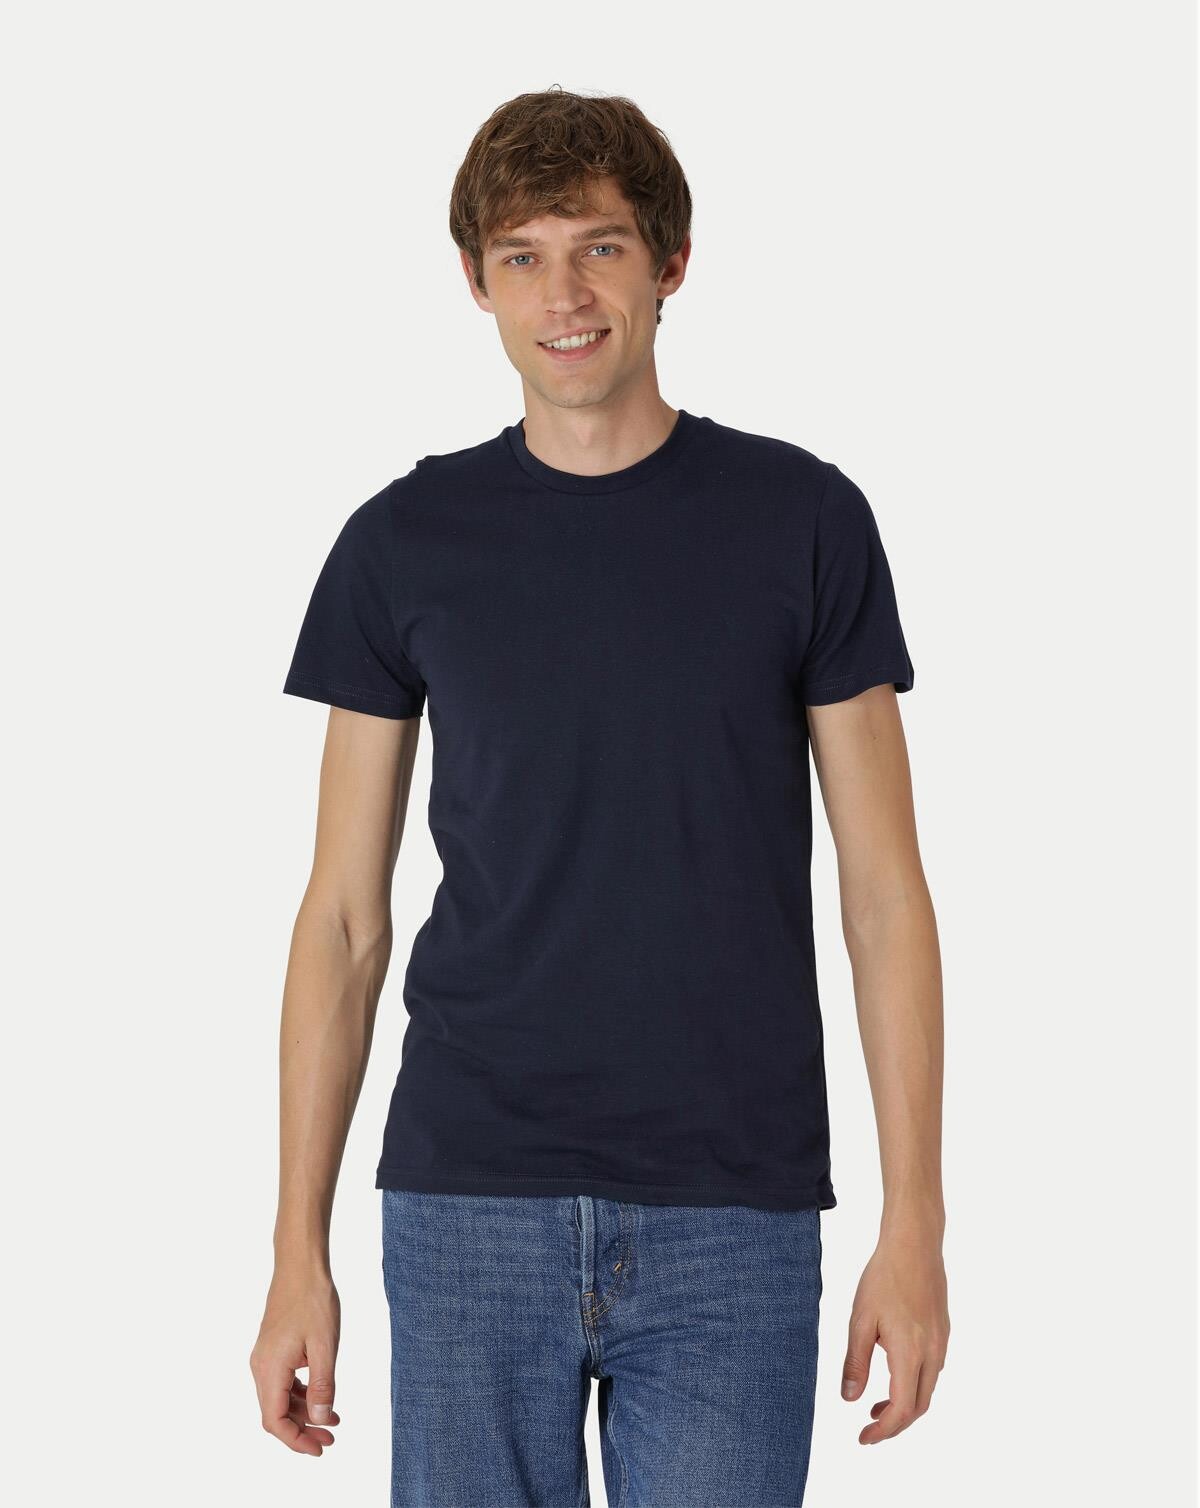 Neutral Økologisk T-shirt til - Tætsiddende (Navy, 4XL)